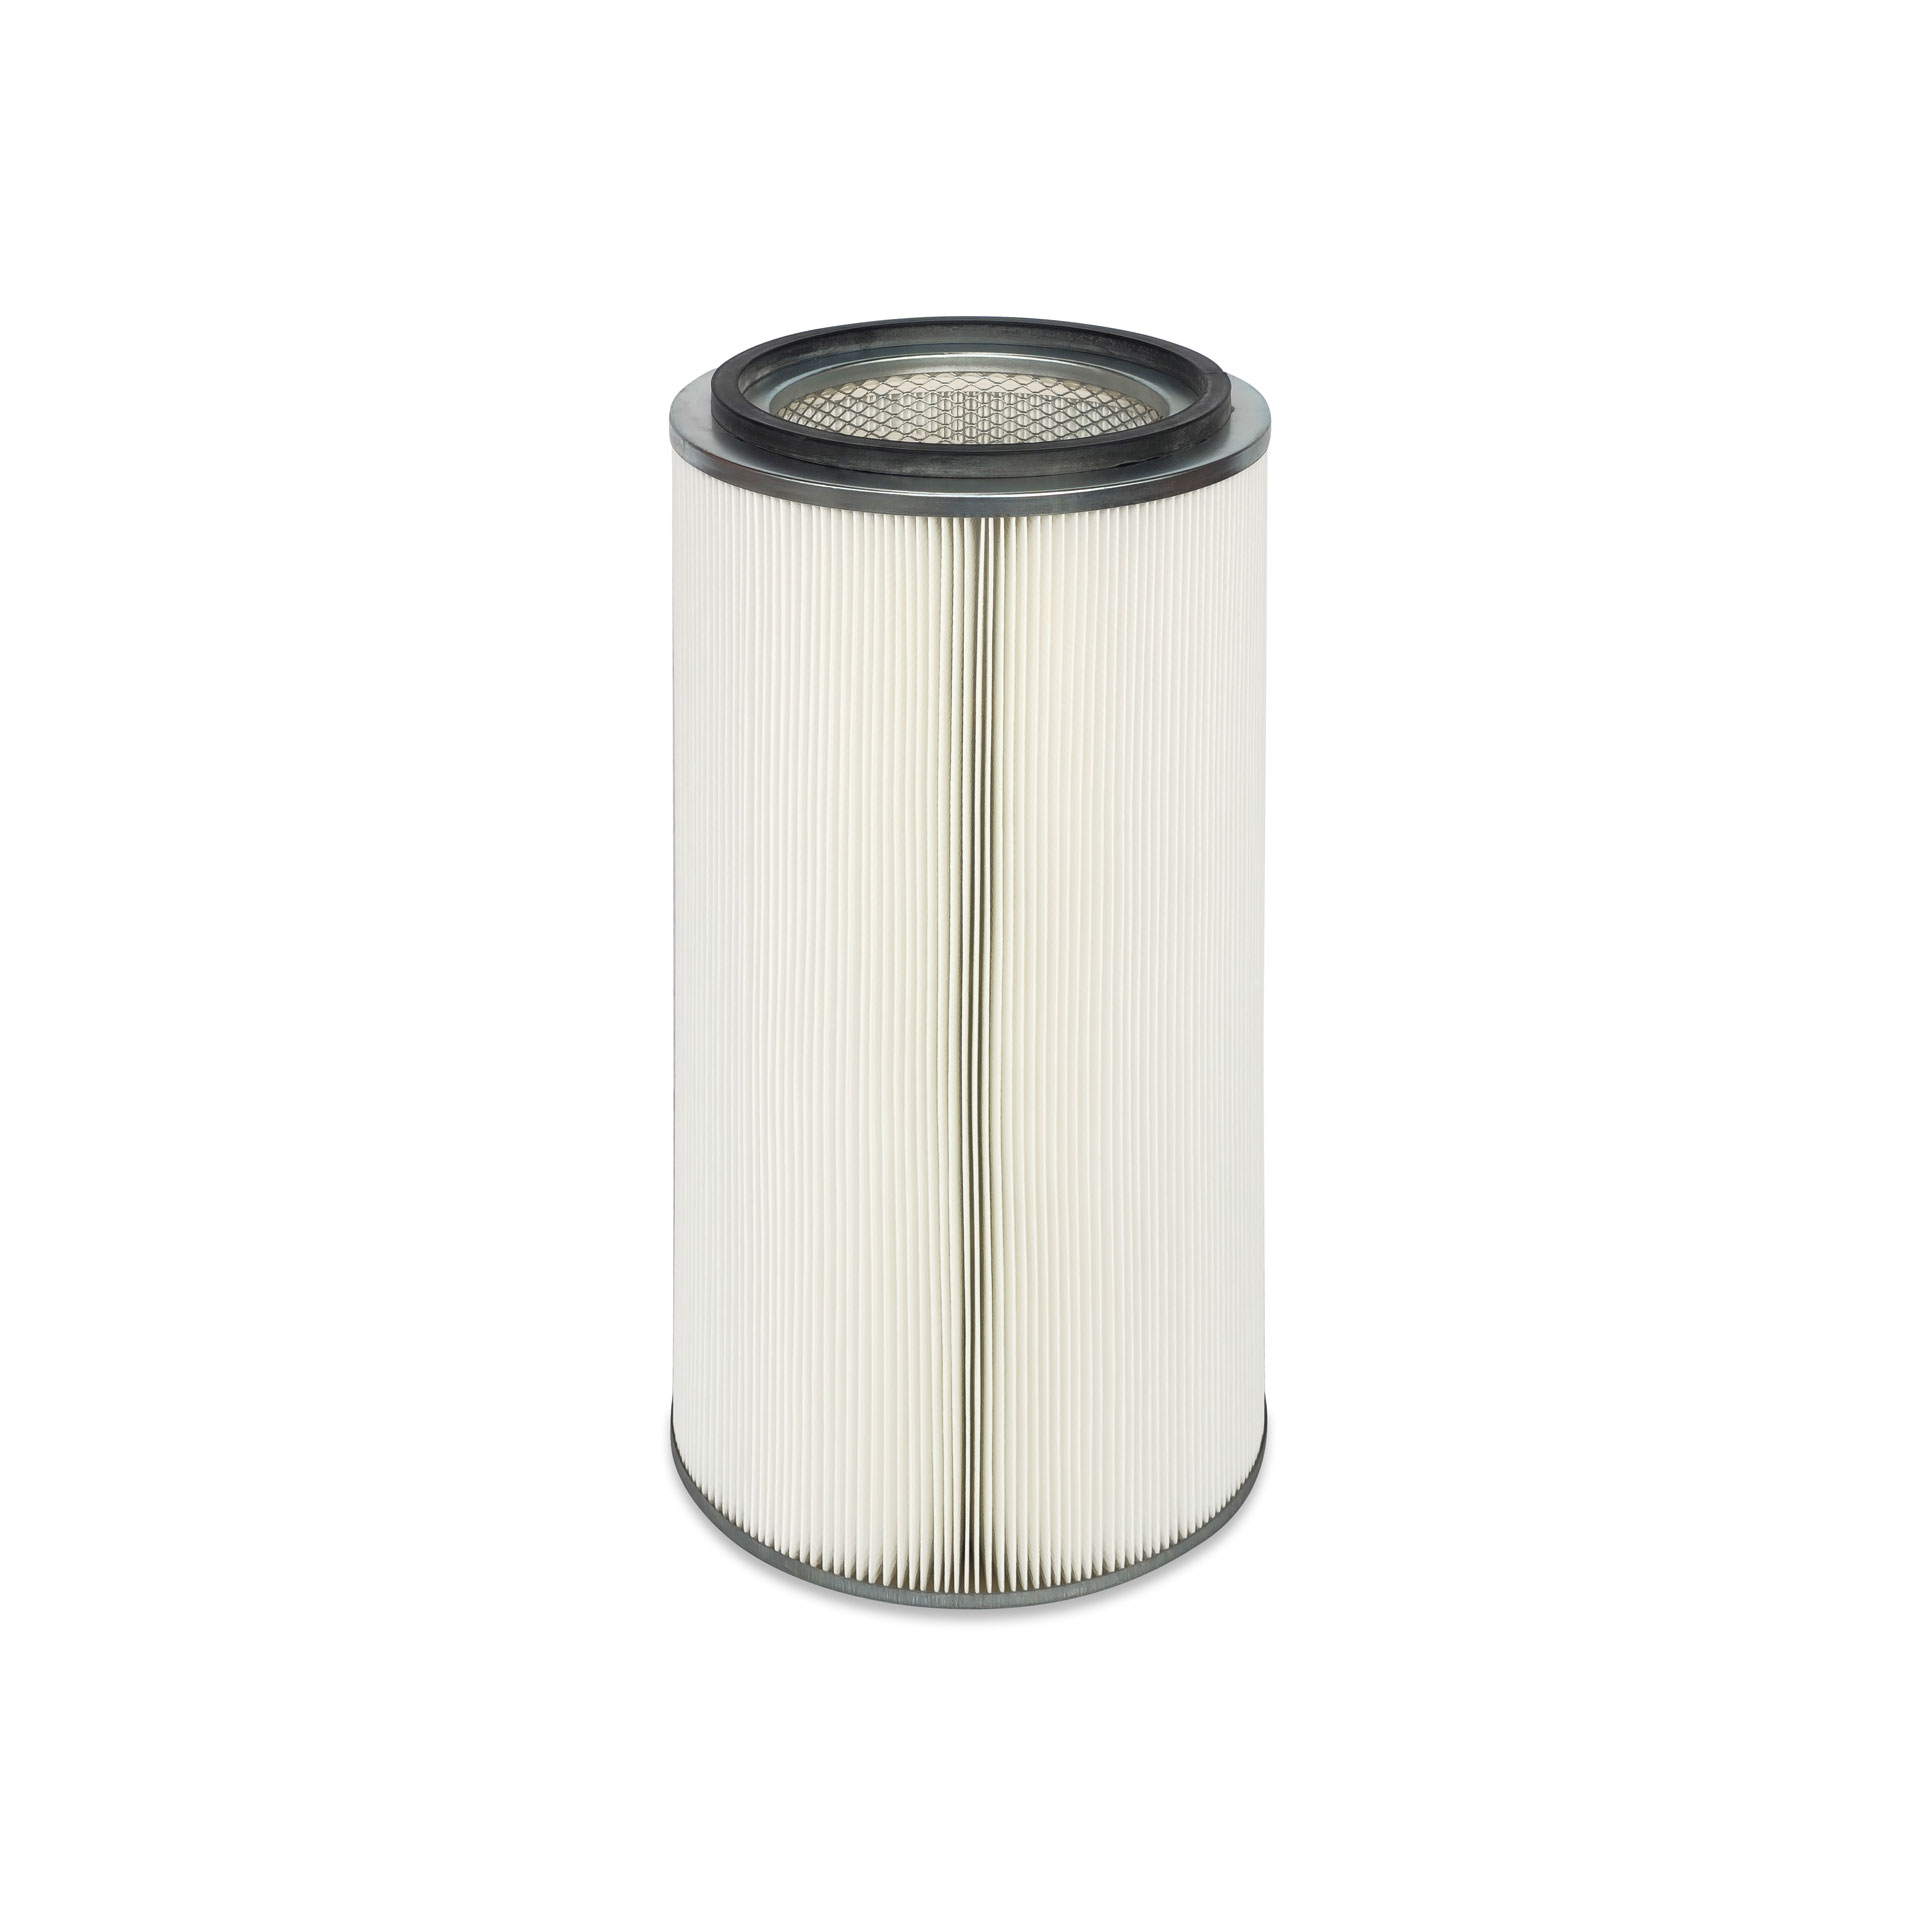 Filterpatrone - 327x600 mm - ePTFE Membran - 10 m² für KEMPER